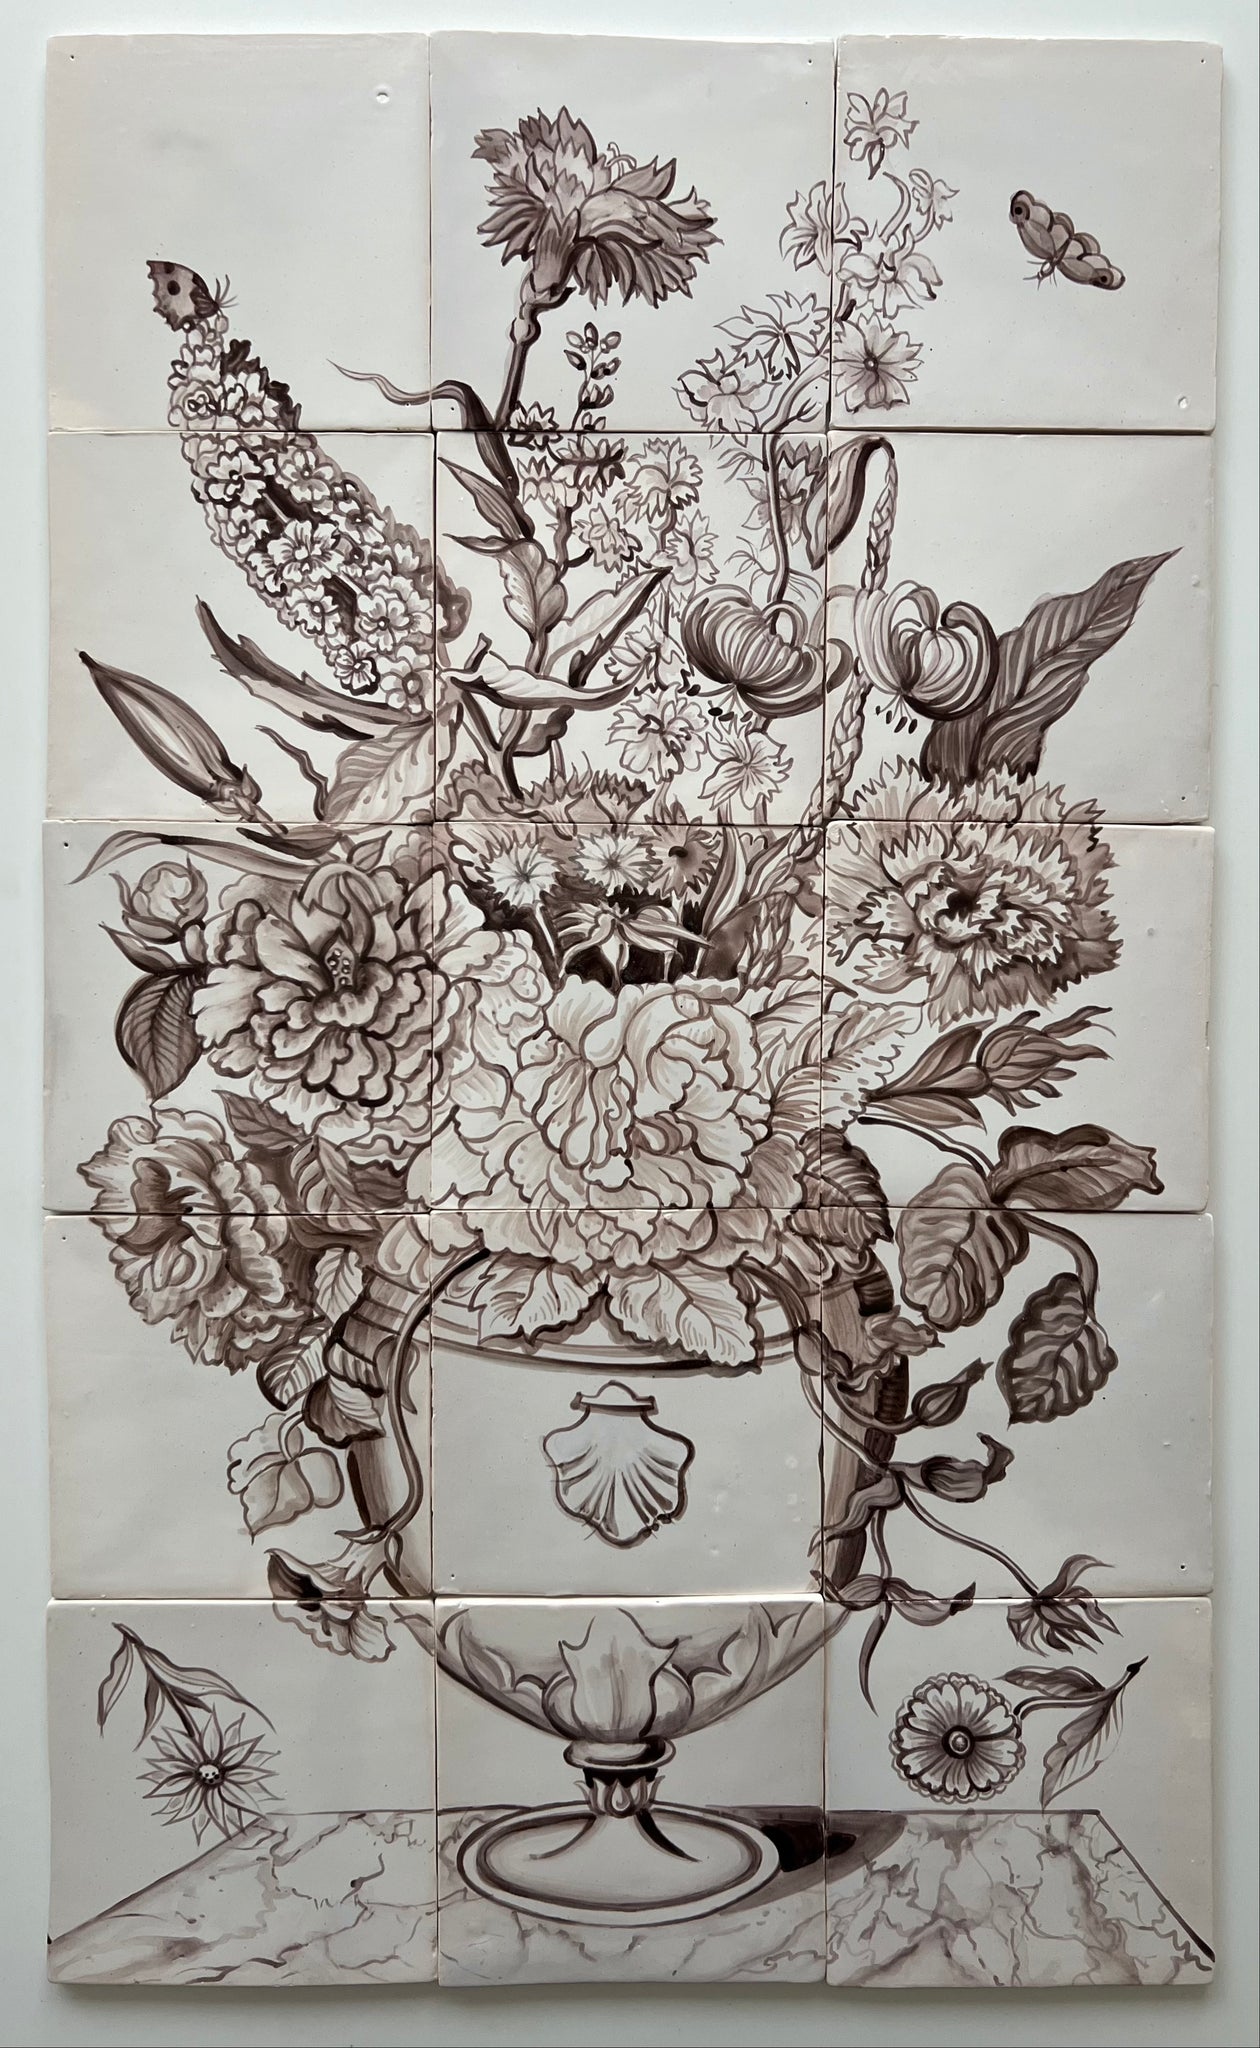 KV Tiles, "Manganese Floral Mural"